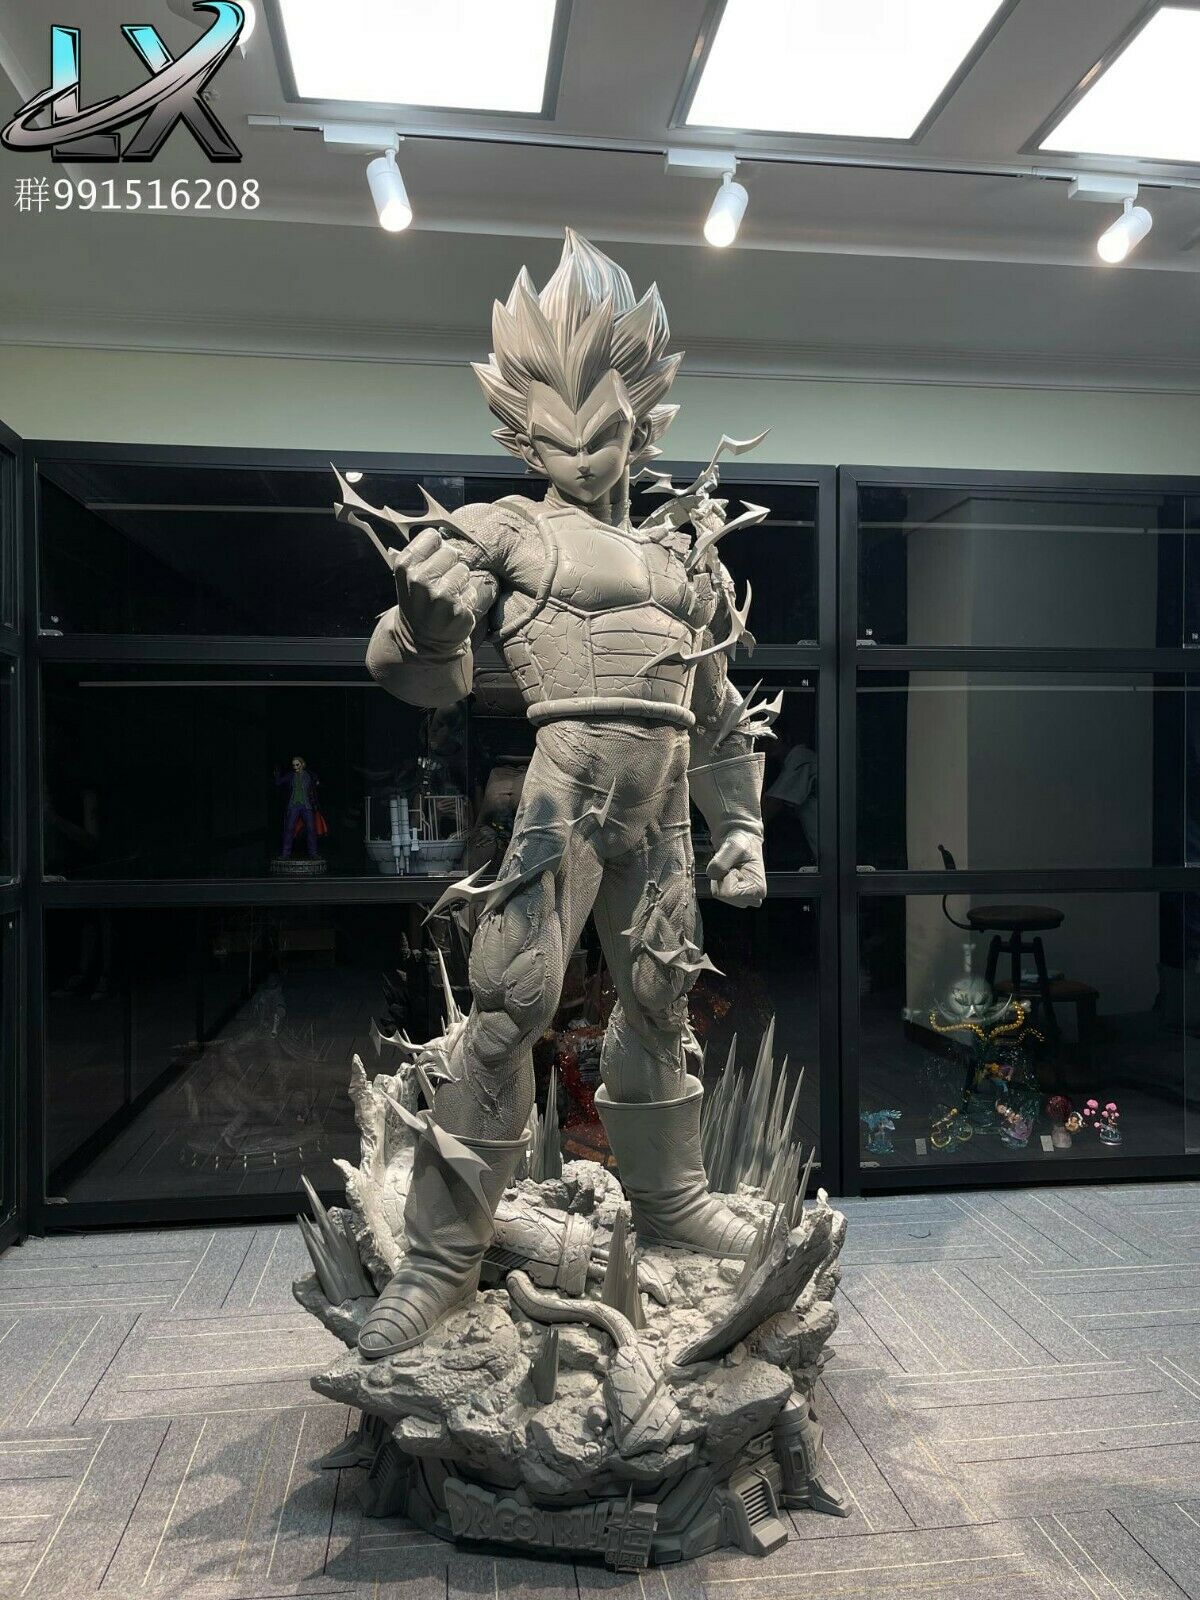 Dragon Ball Z Majin Vegeta Statue Taille Réelle 1/1 F4 Studio